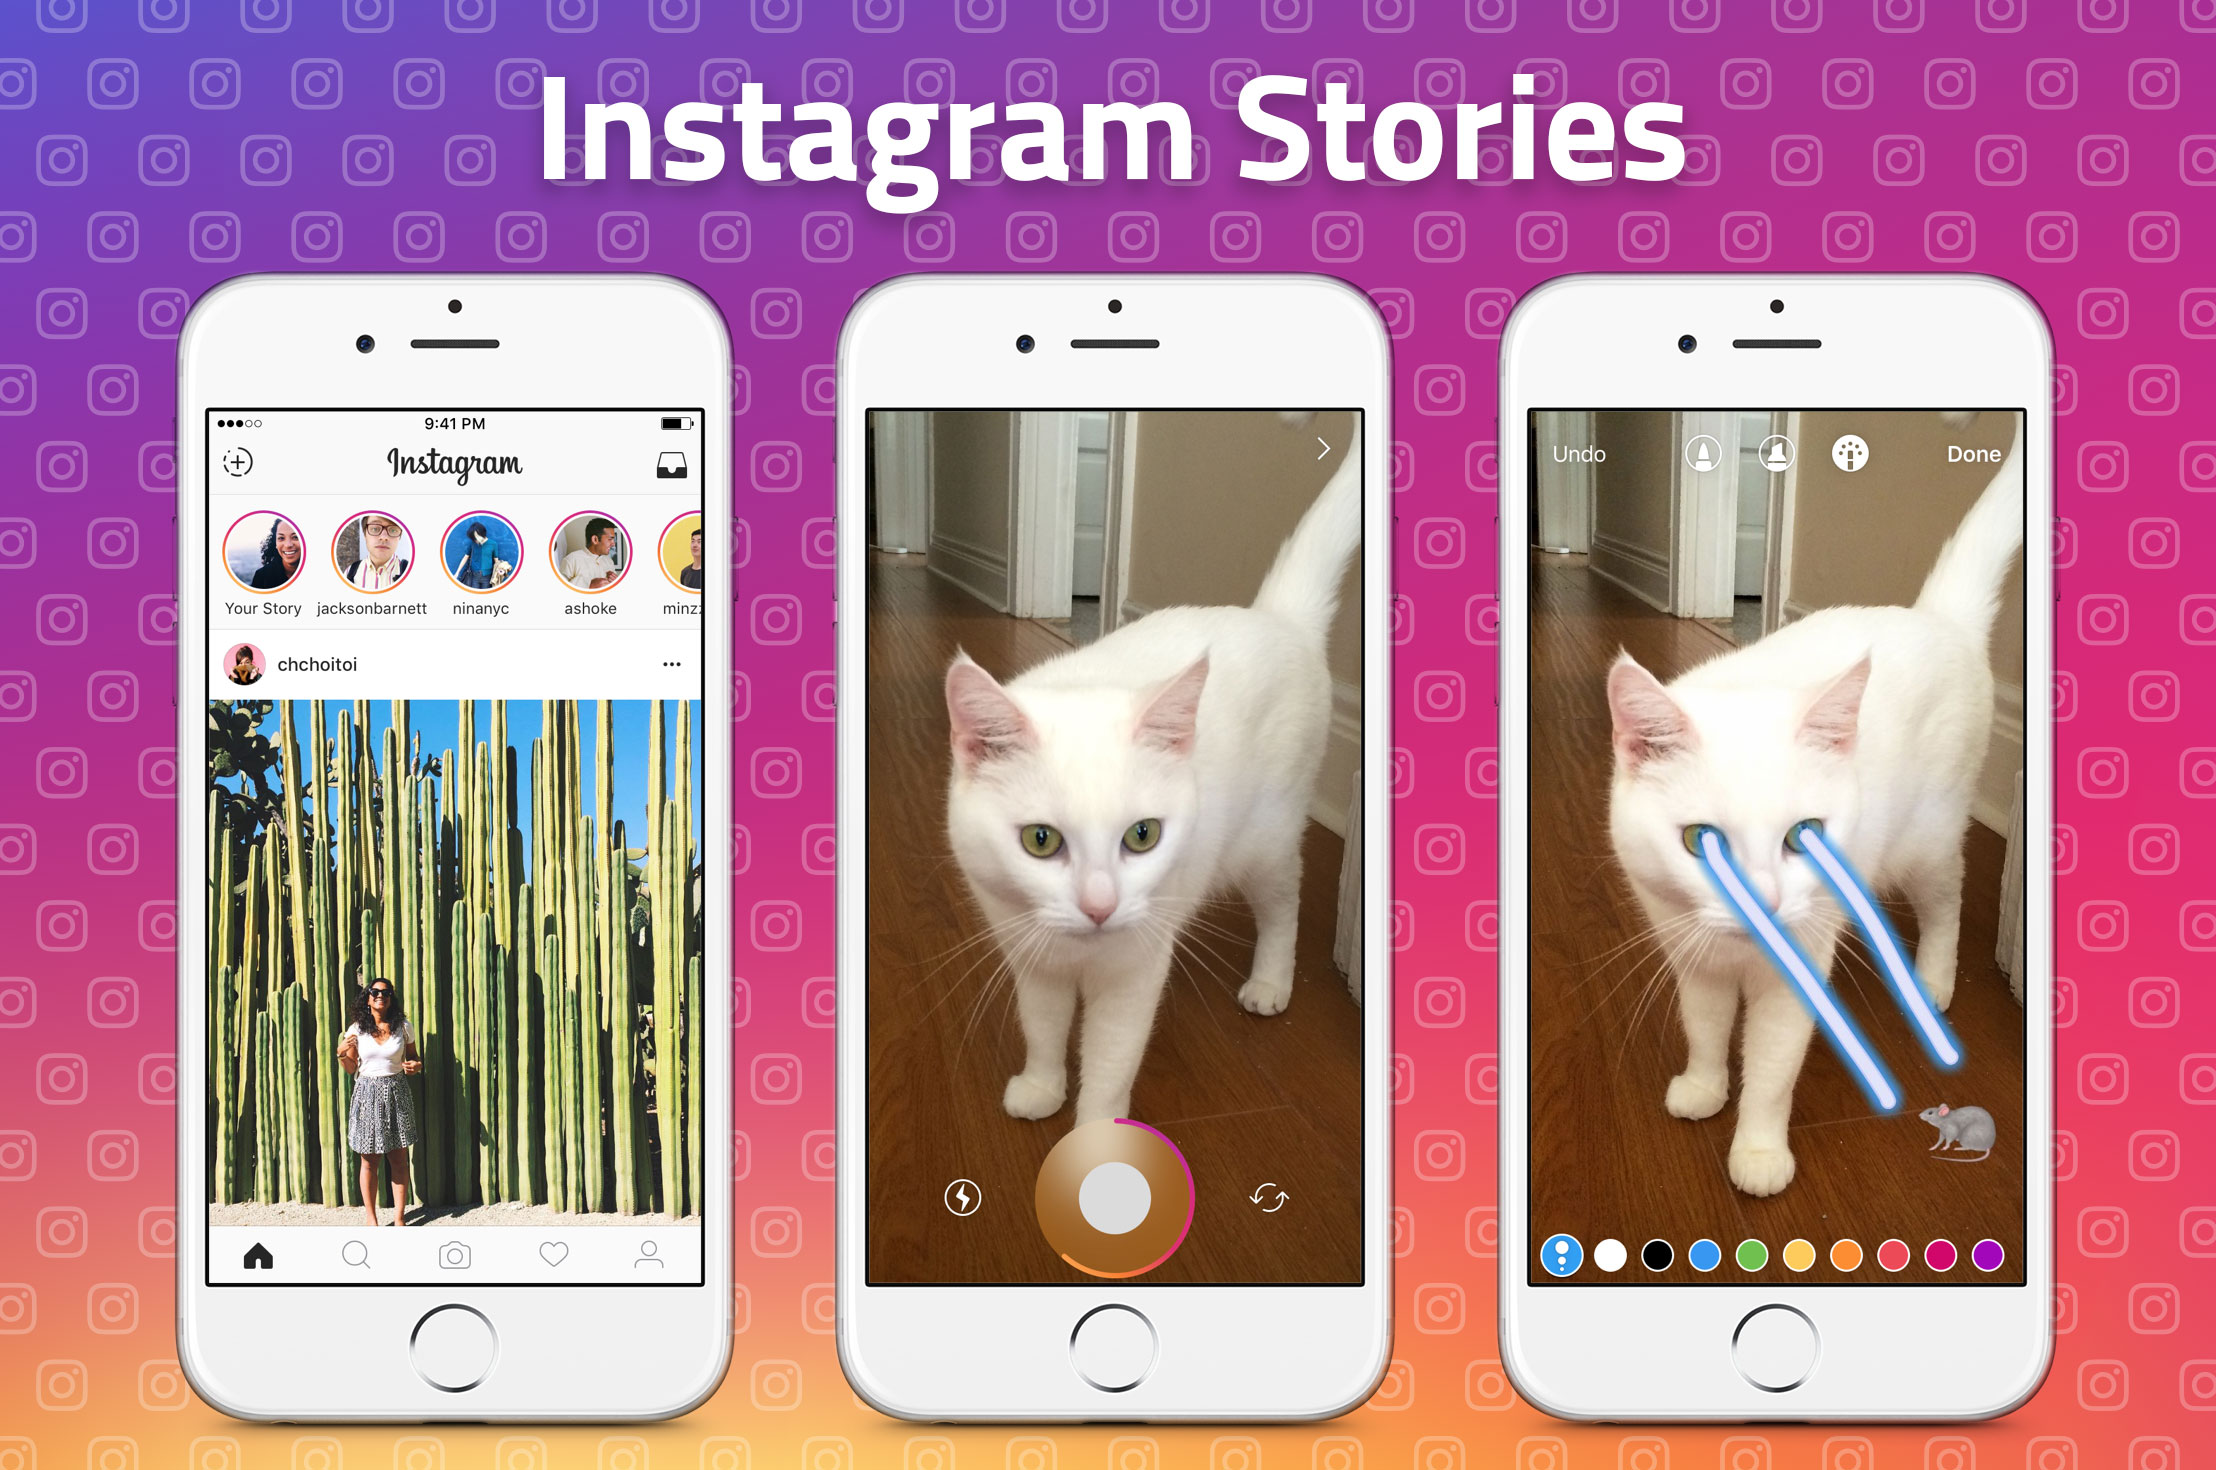 Share someone else's story on Instagram